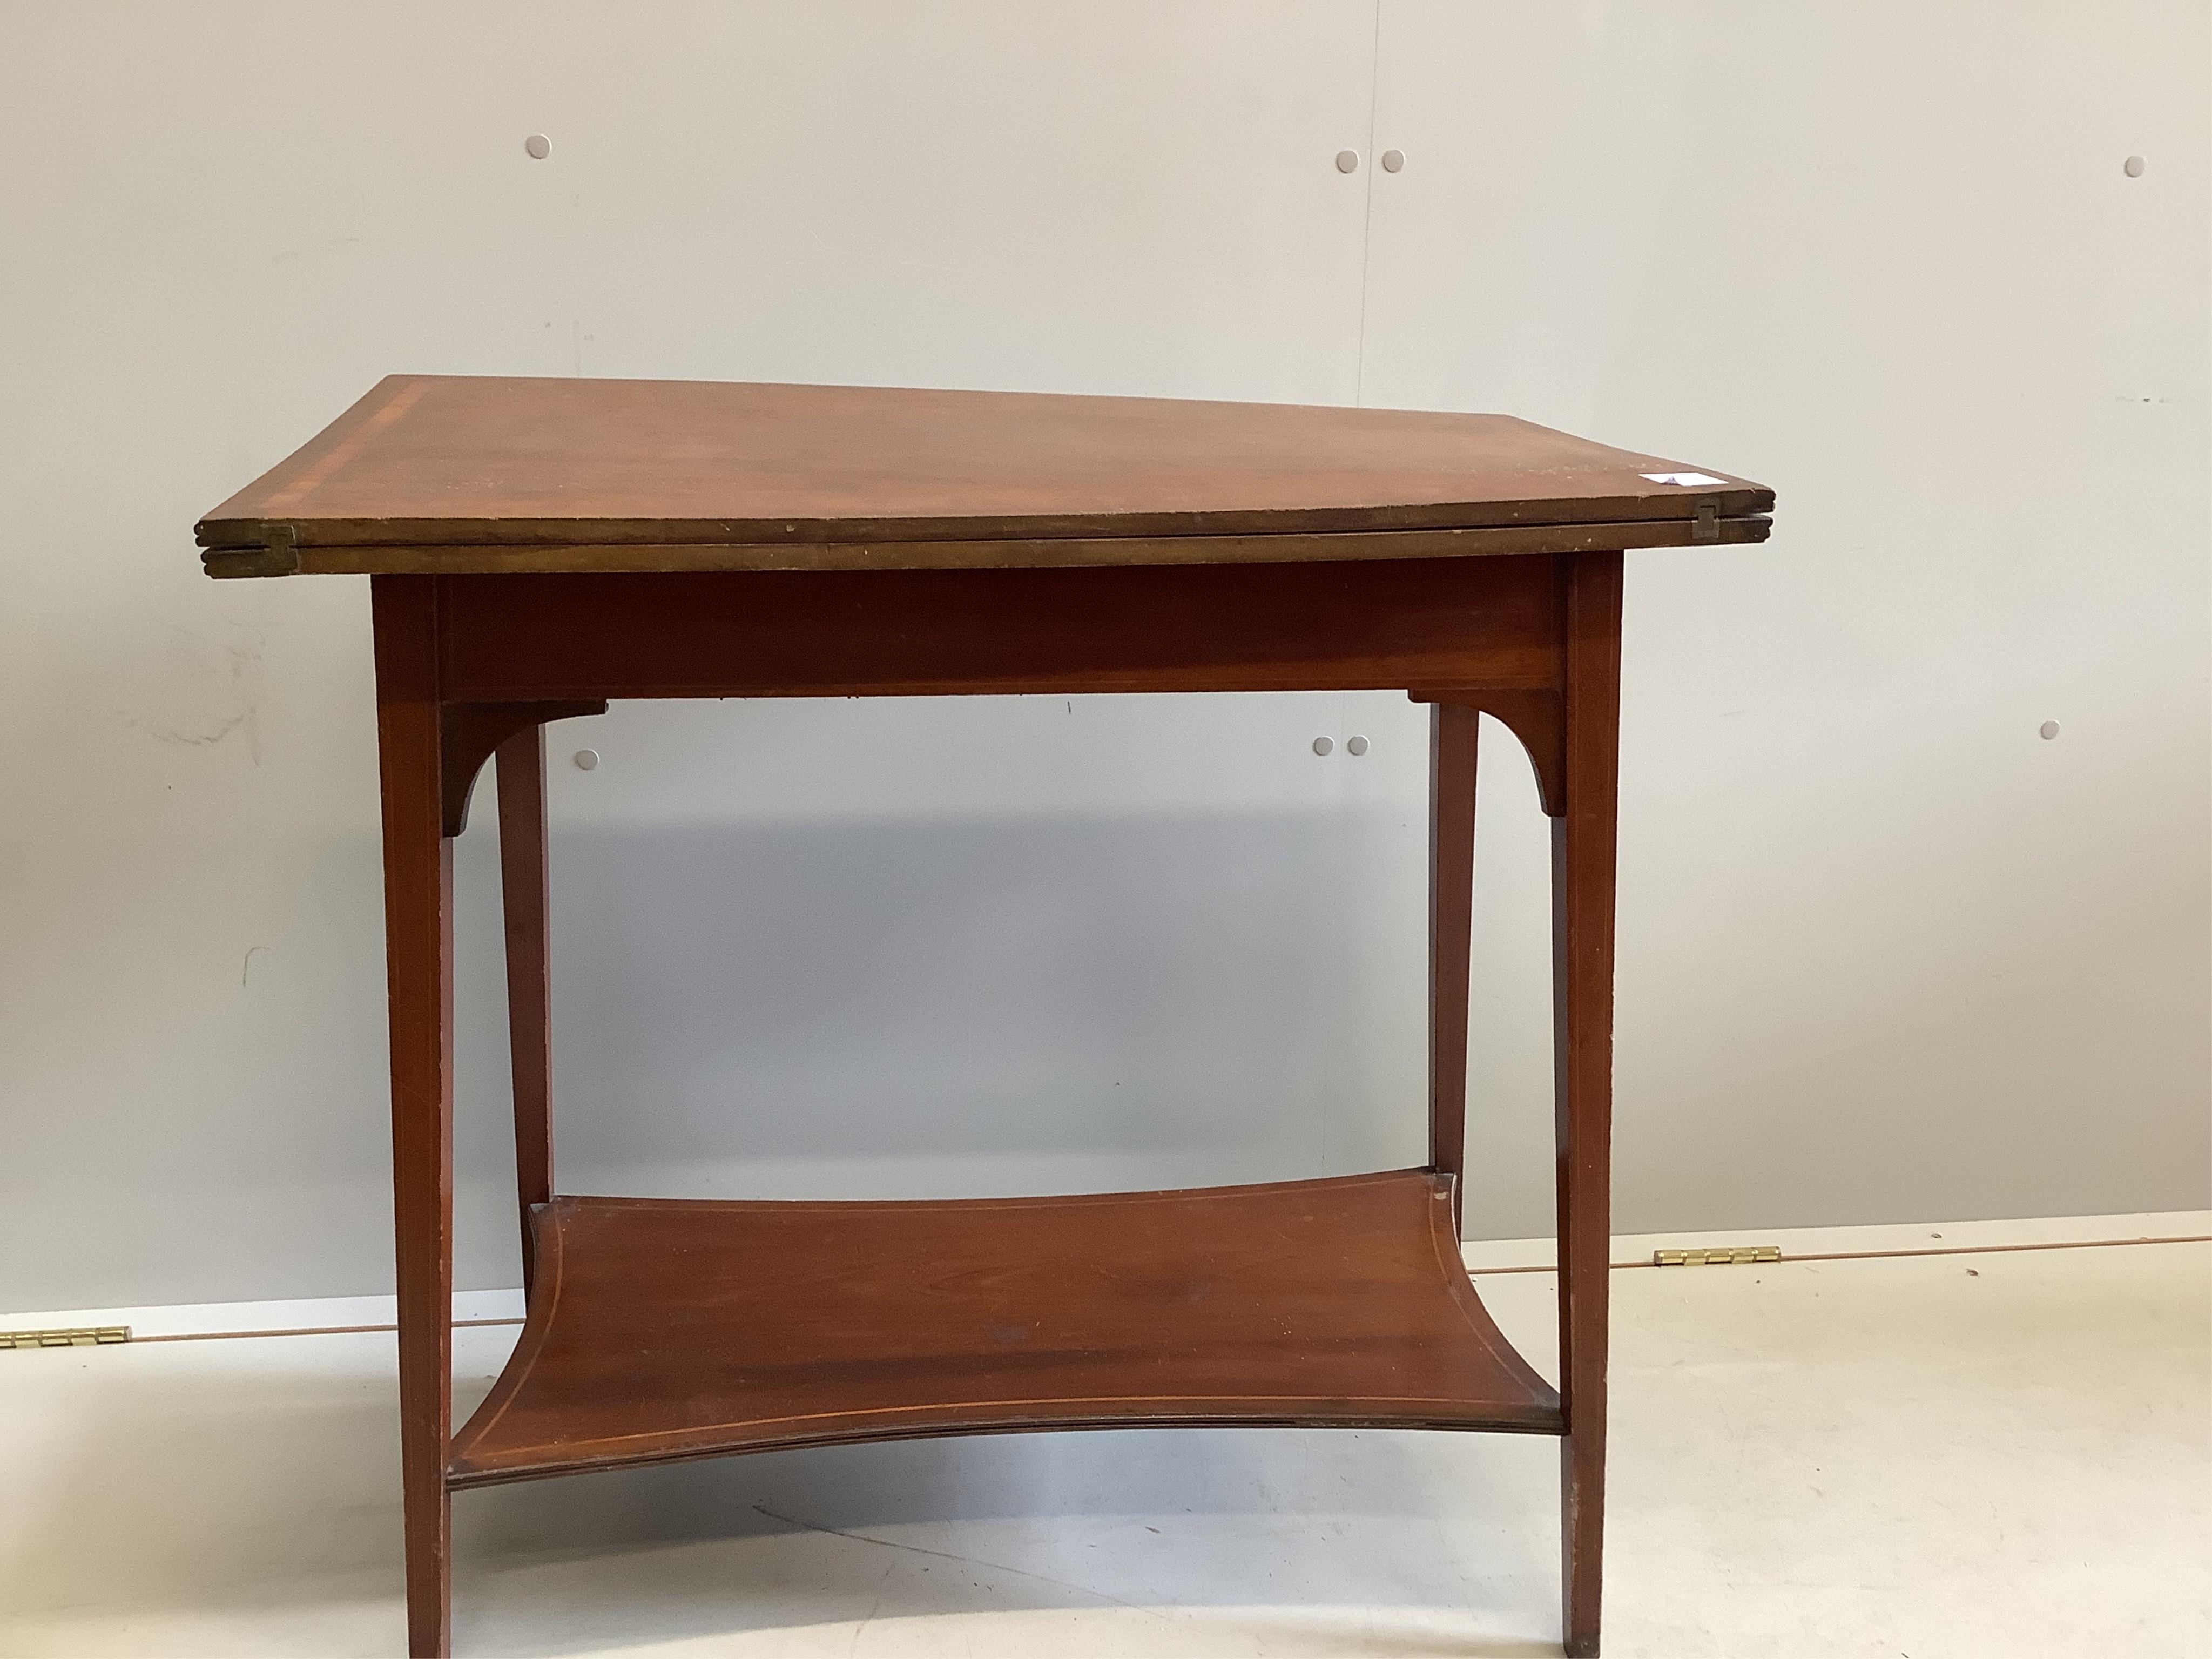 An Edwardian satinwood banded mahogany rectangular folding tea table, width 75cm, depth 42cm, height 73cm. Condition - poor